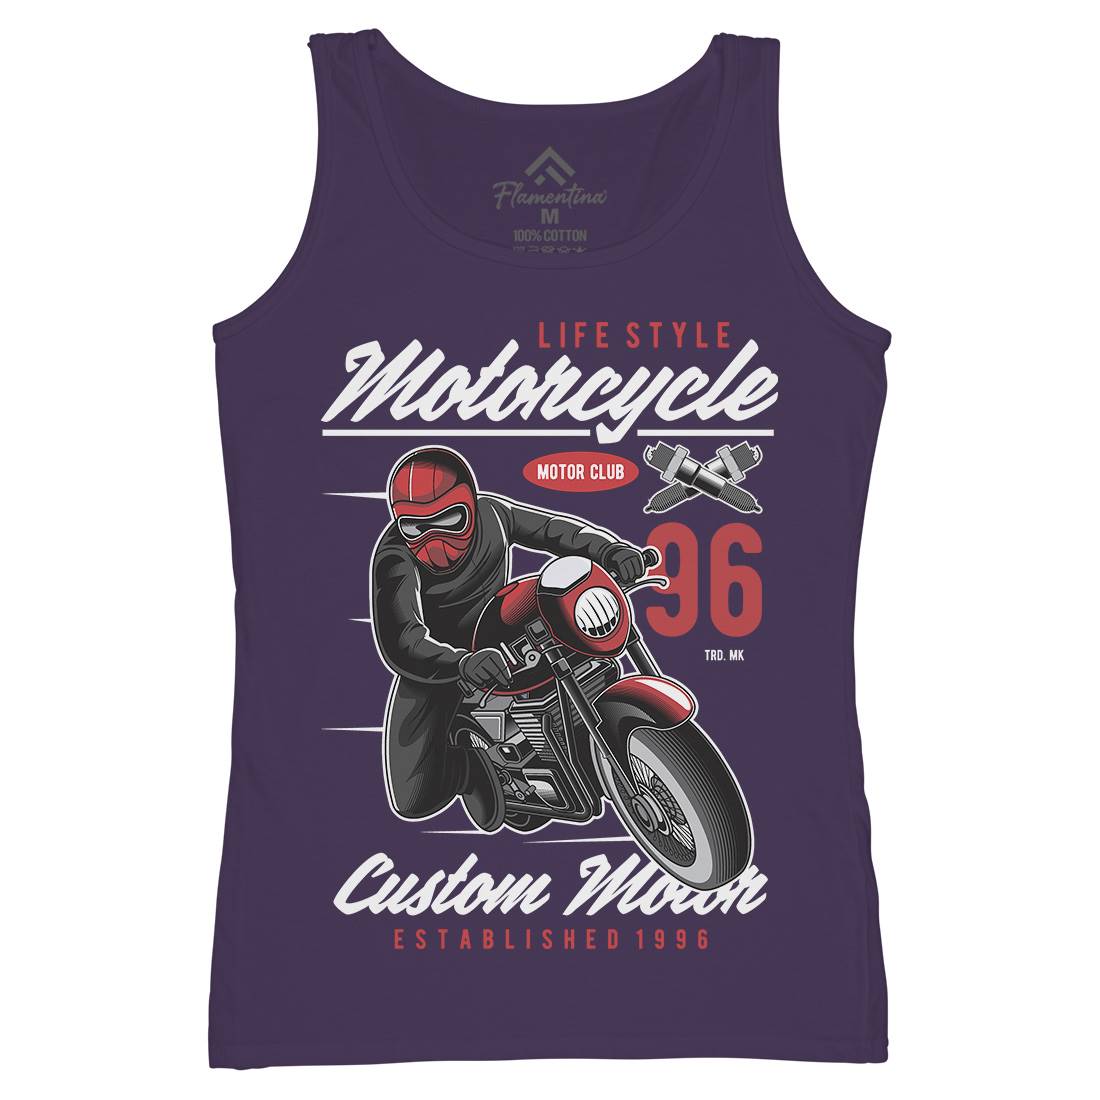 Lifestyle Womens Organic Tank Top Vest Motorcycles C399